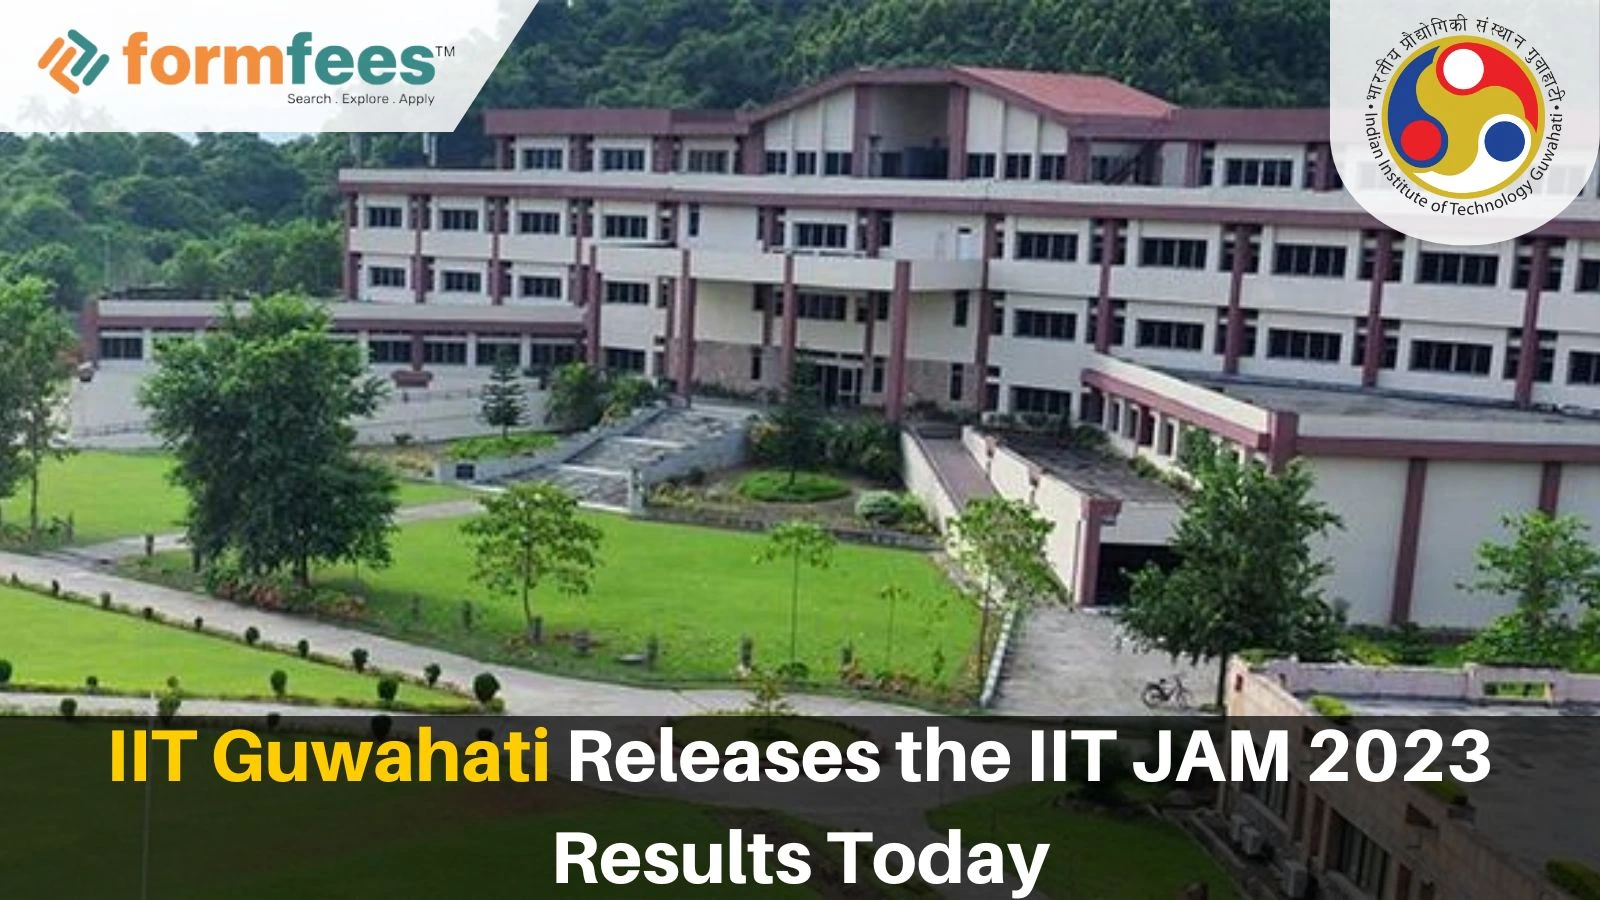 IIT Guwahati Releases the IIT JAM 2023 Results Today